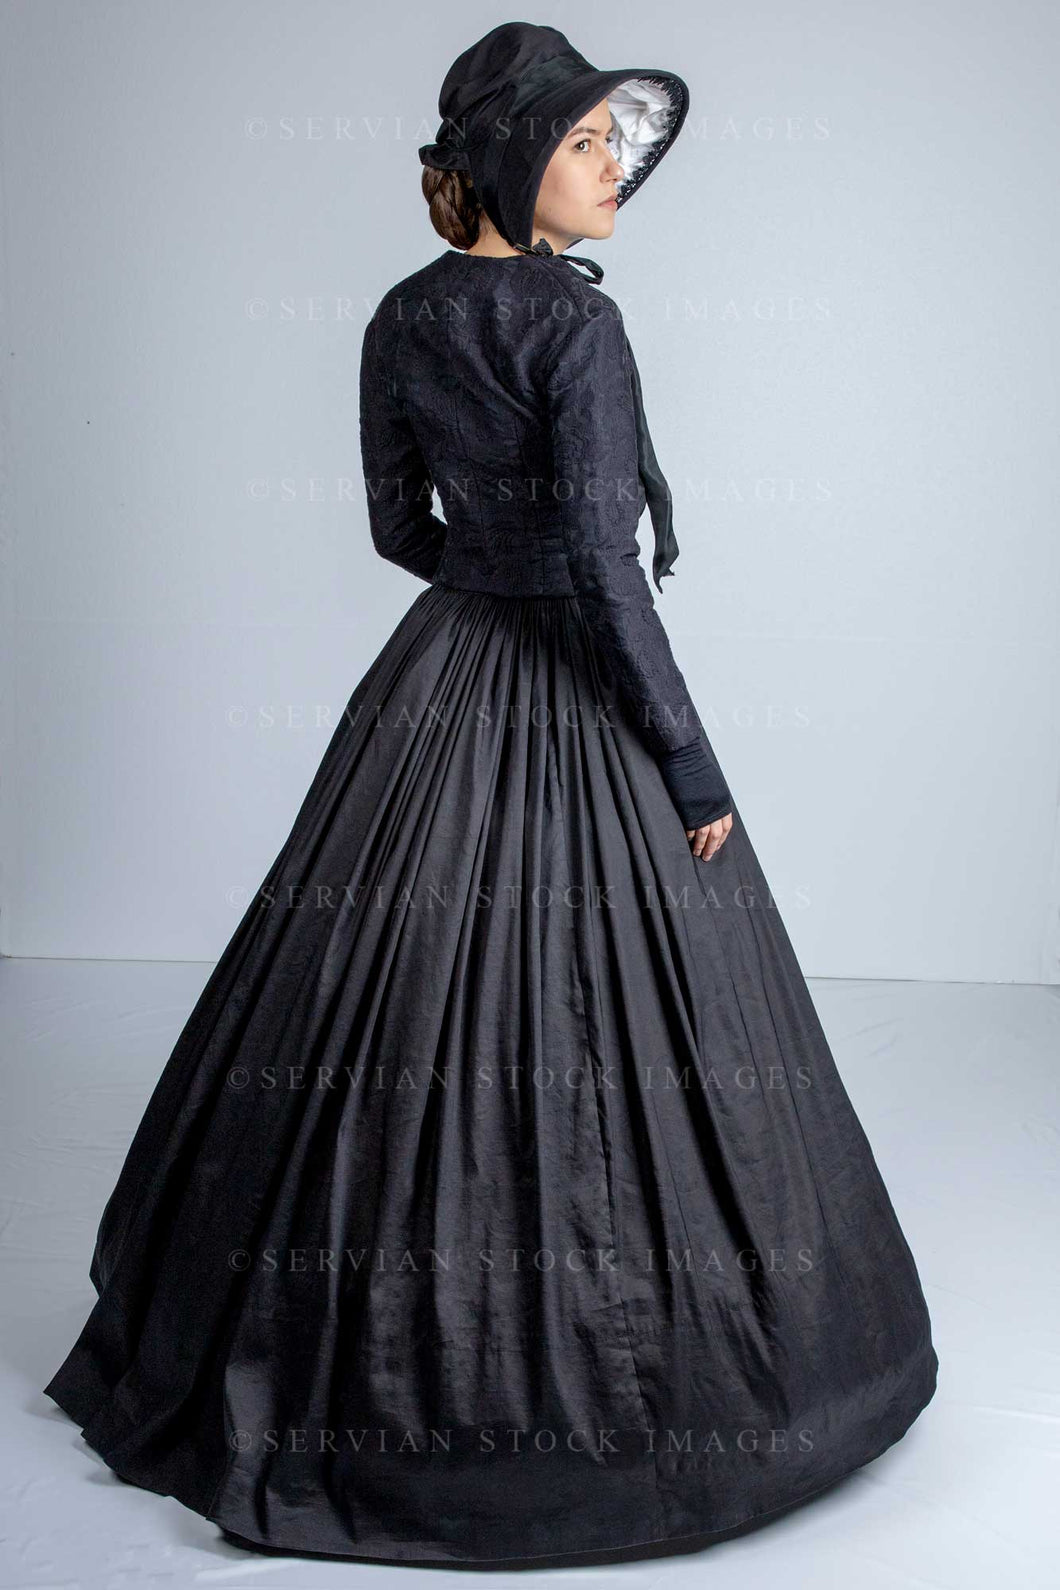 Victorian woman wearing a black bodice and skirt (Amalia 0727)